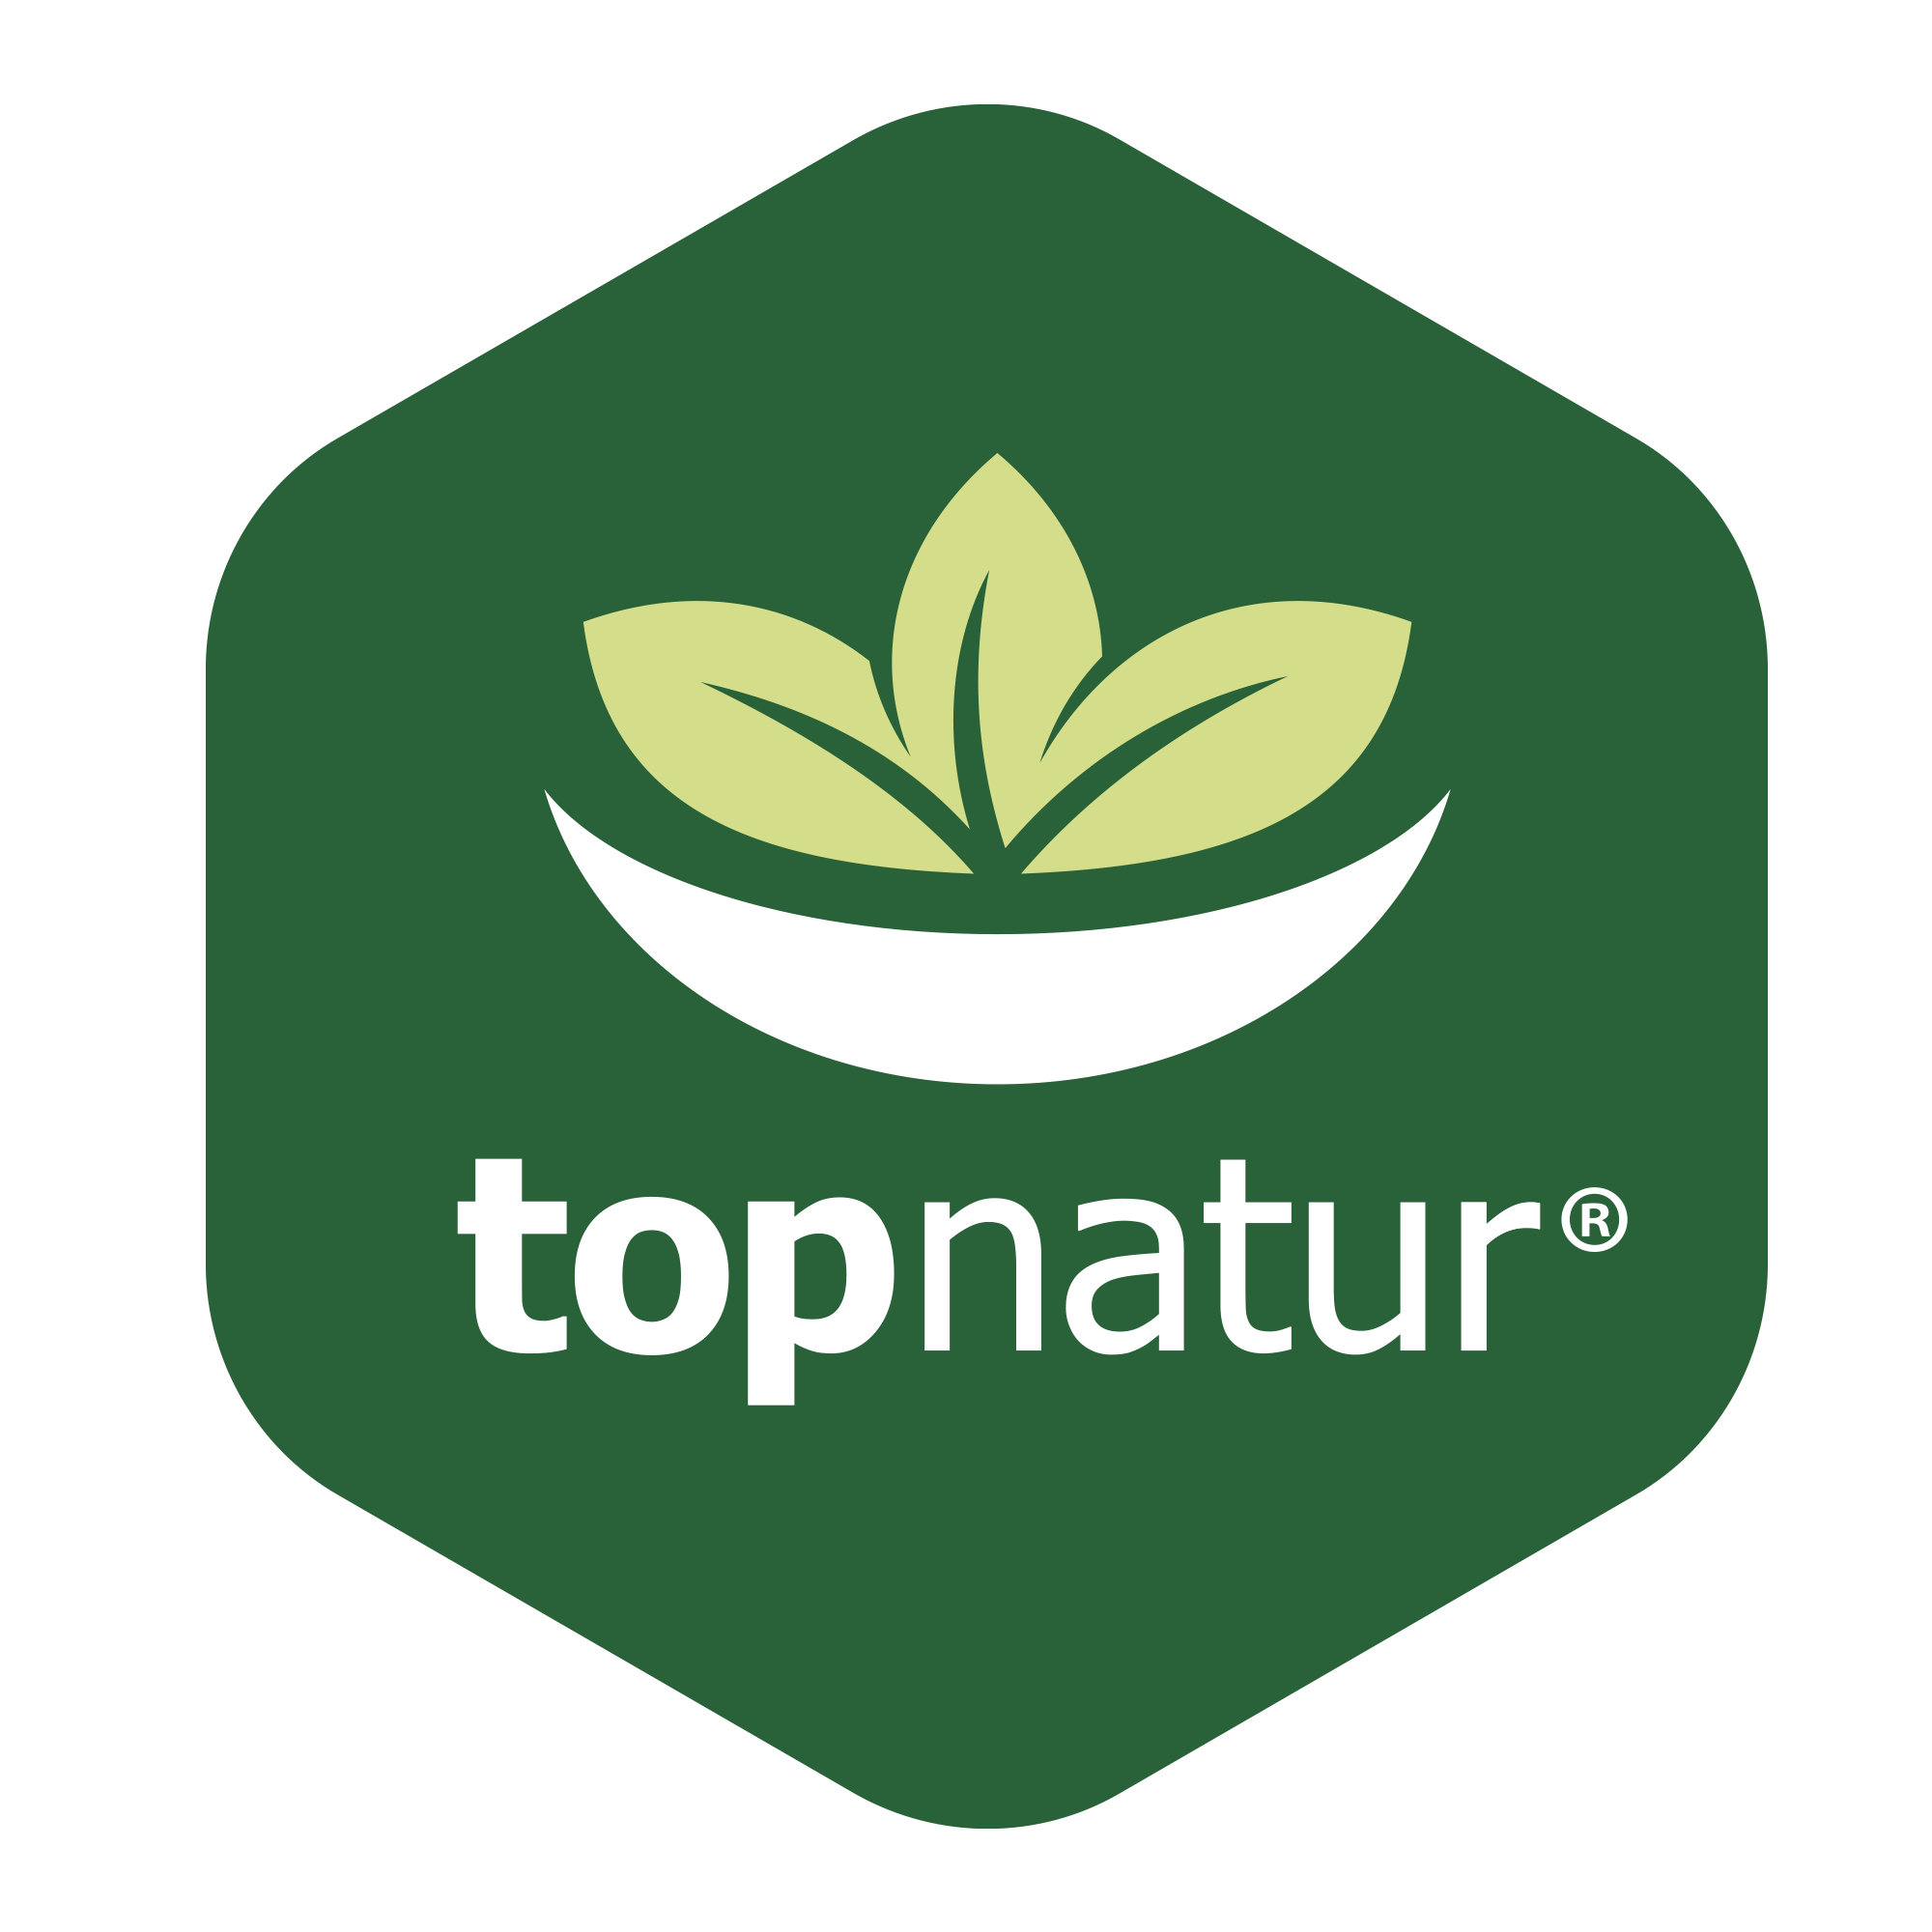 topnatur-logo-2000x2000-1.png (139 KB)